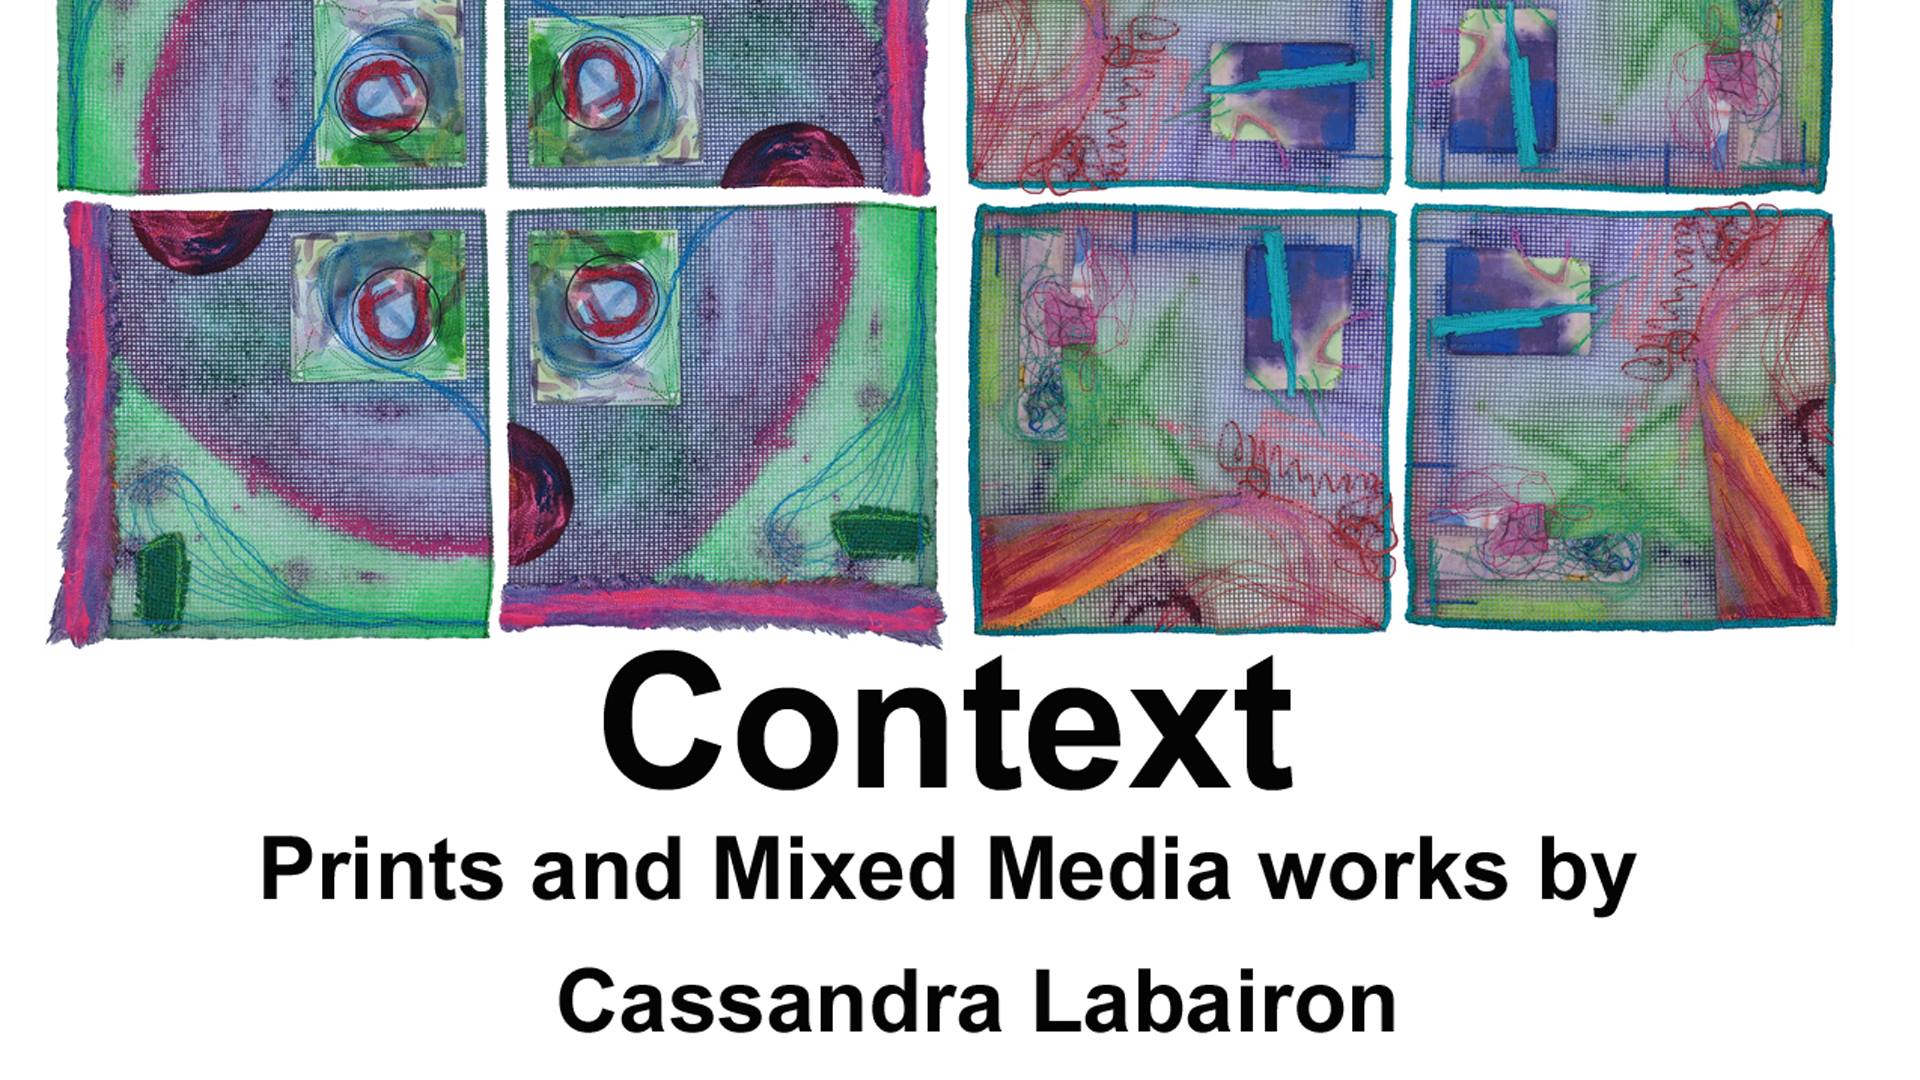 Reception: Context by Cassandra Labairon